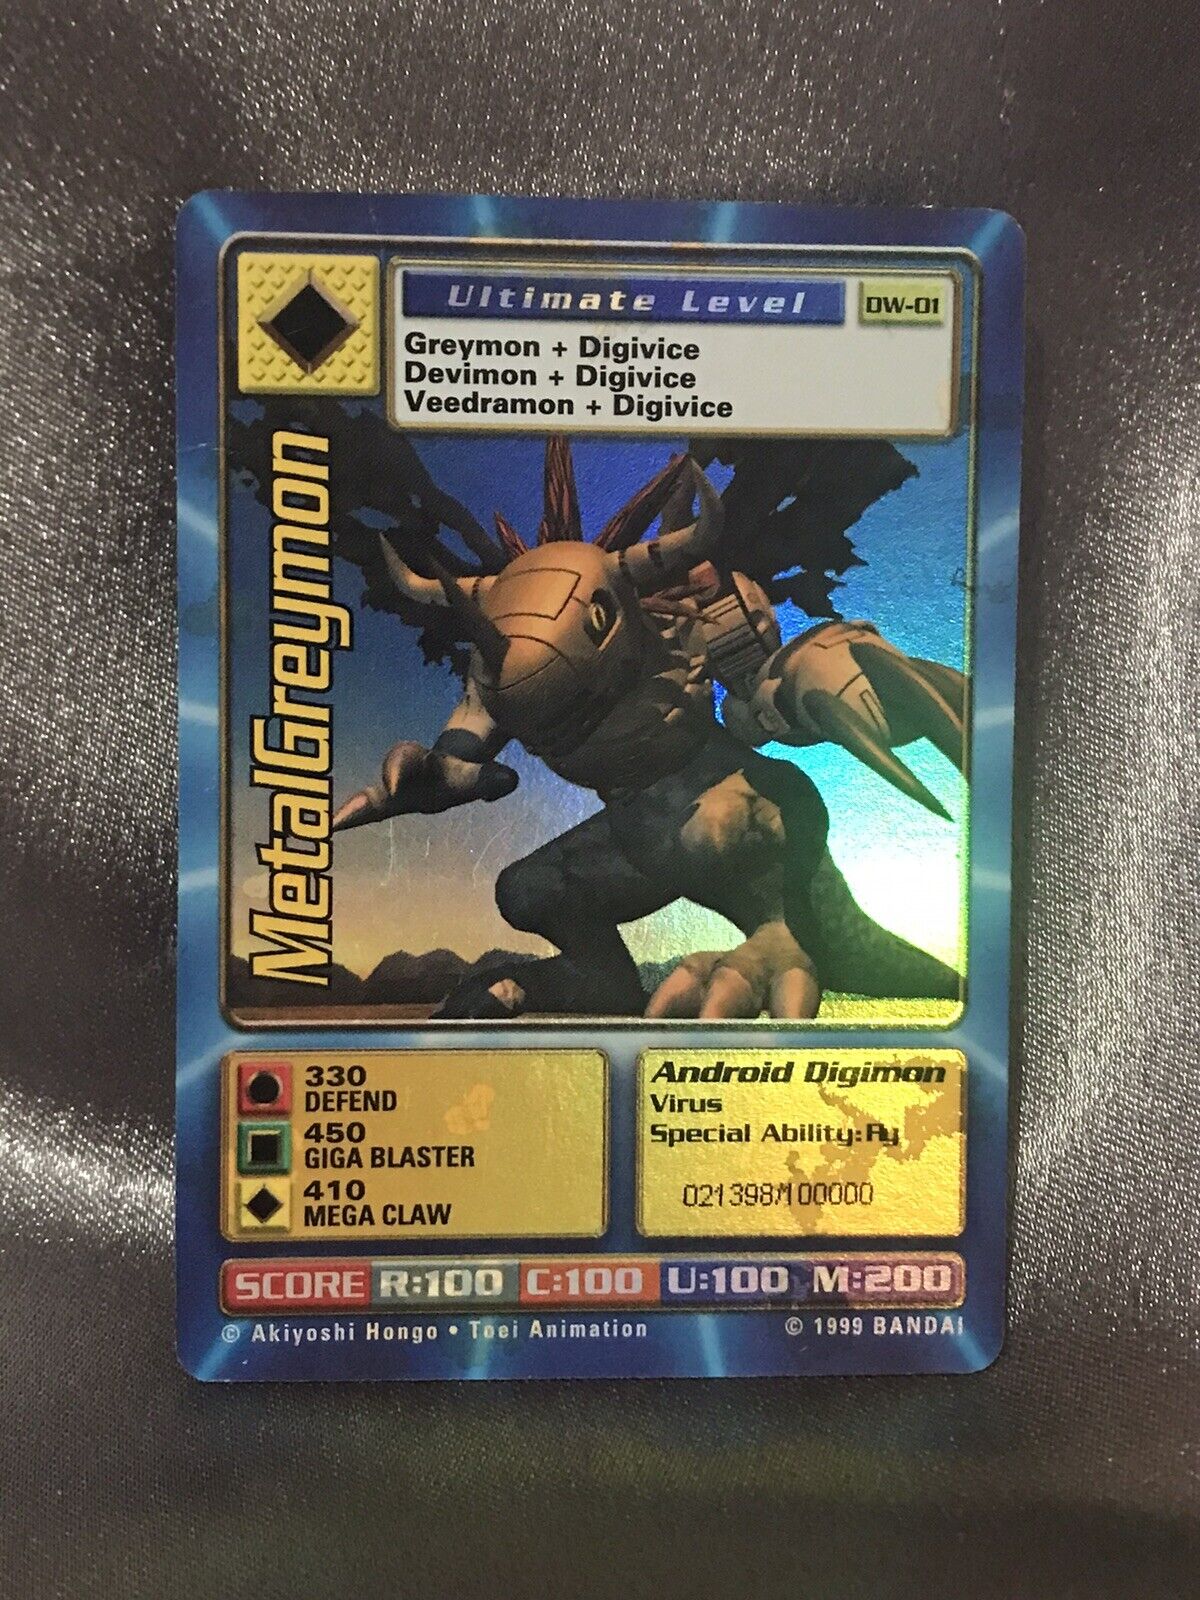 Digimon World PlayStation Promo DW-01 MetalGreymon - number 021398 / 100,000